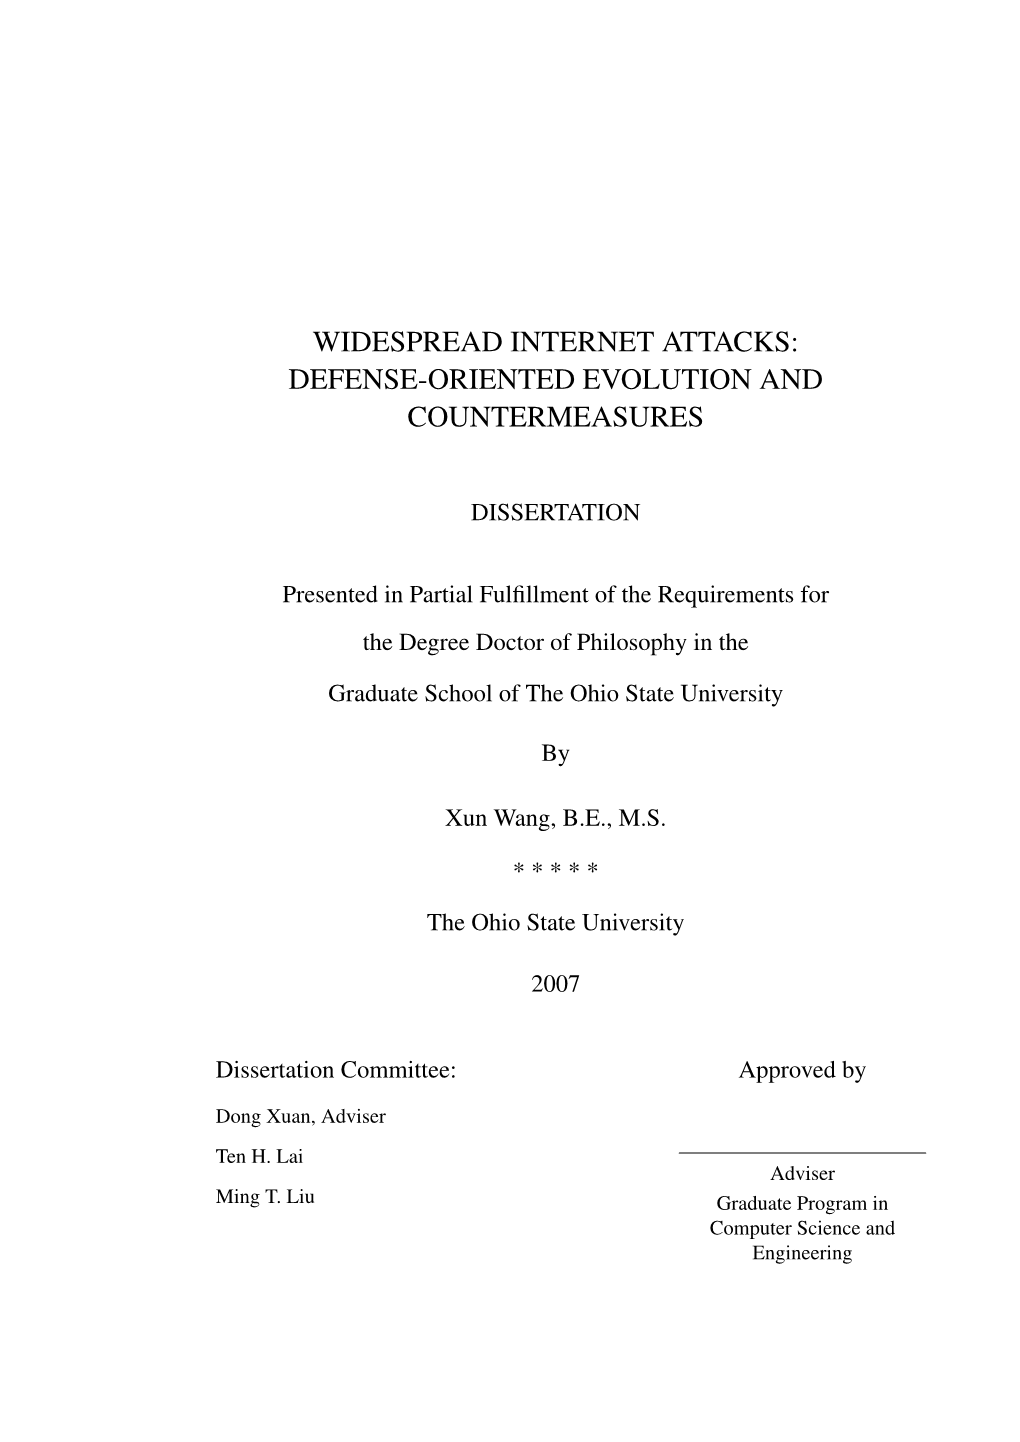 Widespread Internet Attacks: Defense-Oriented Evolution and Countermeasures